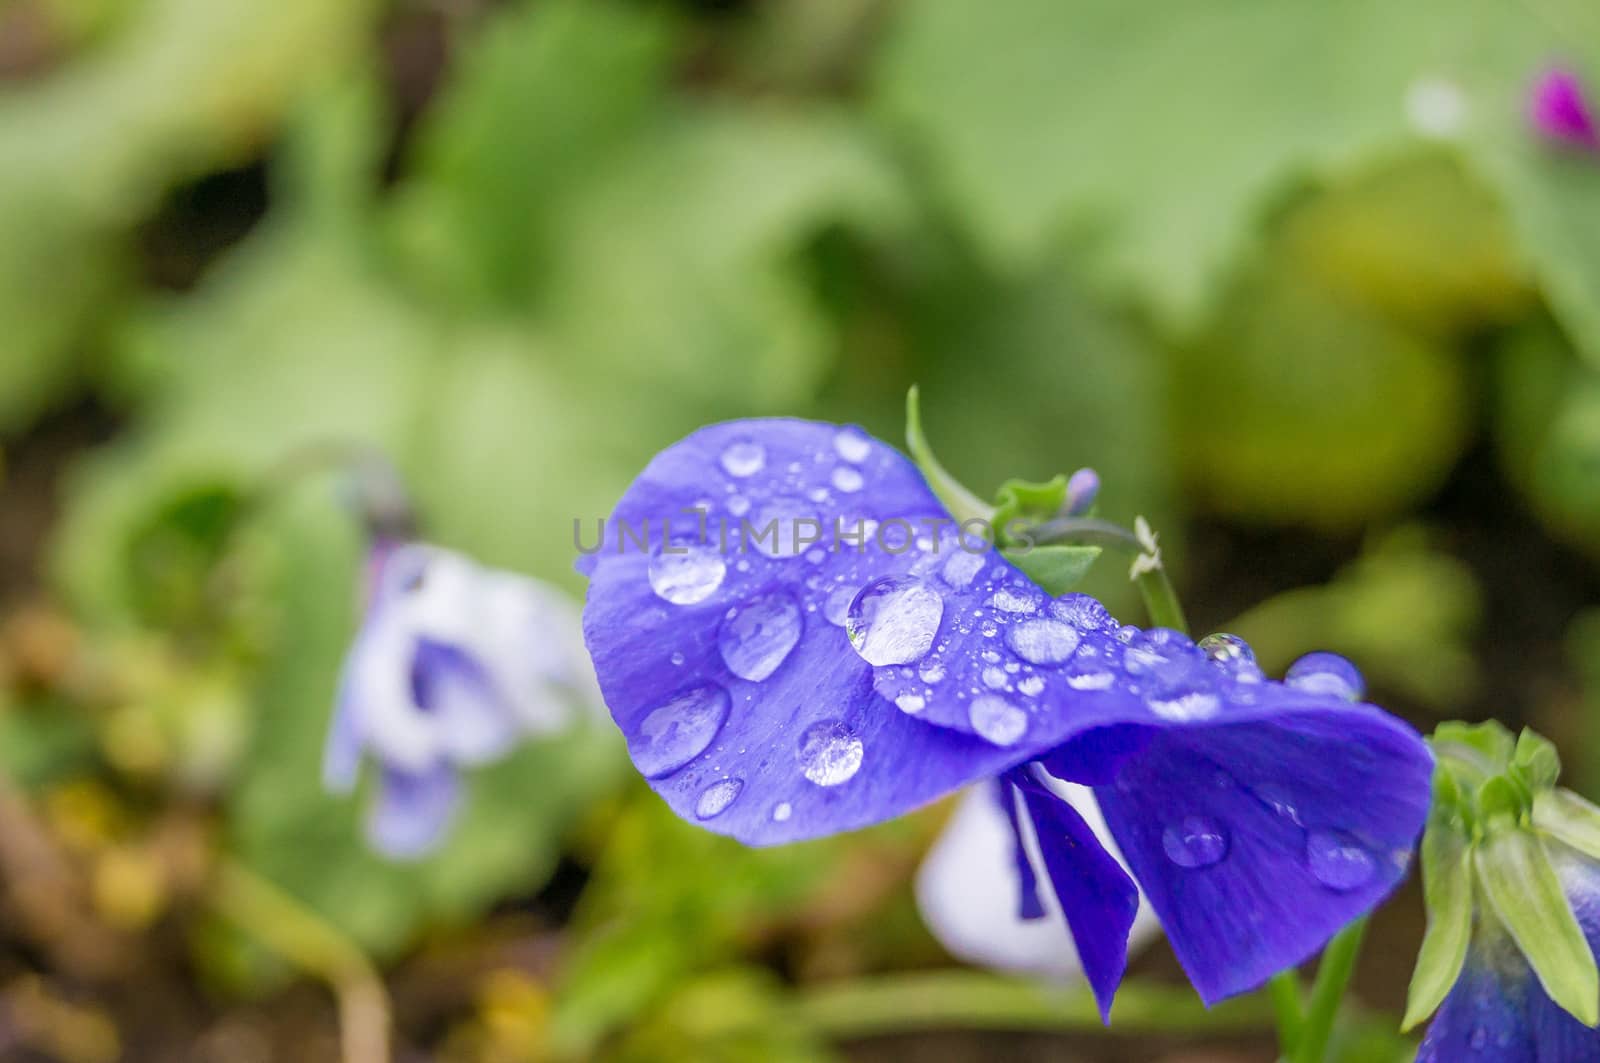 Drops of rain on a blue flower by bignoub